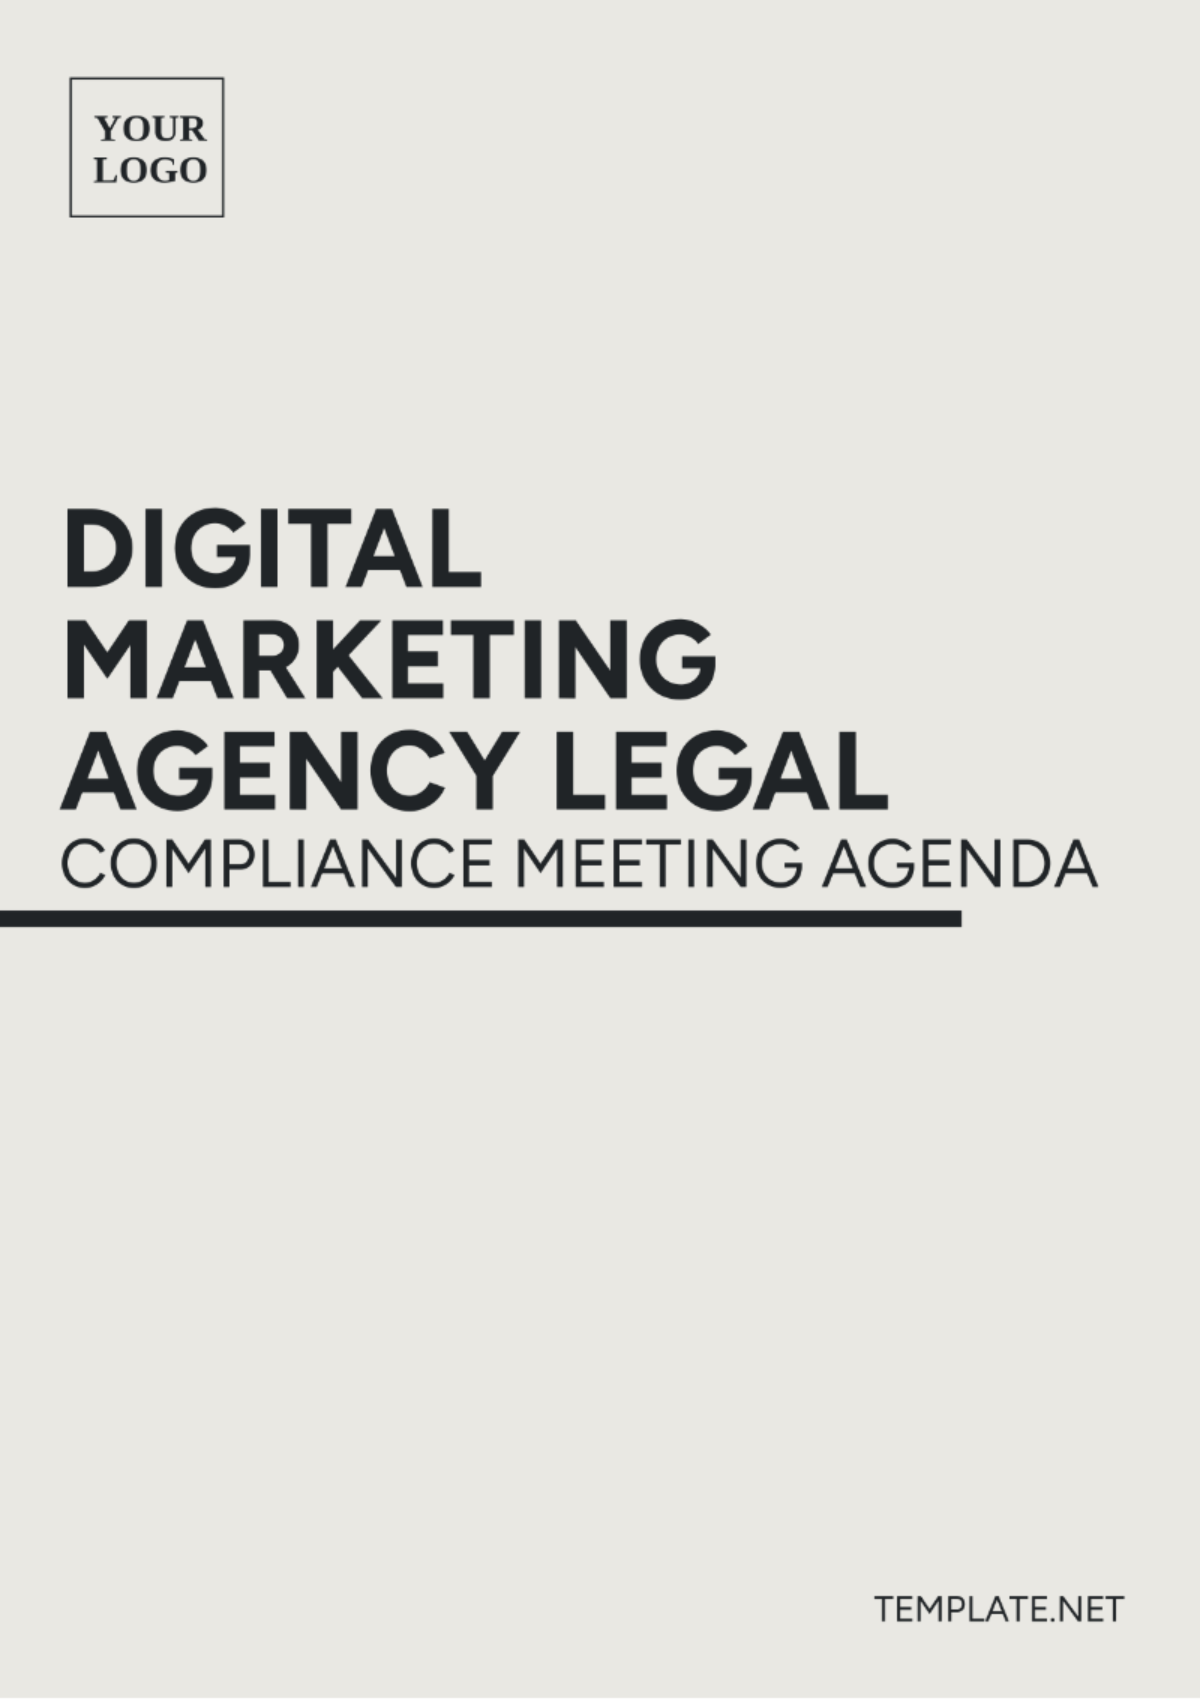 Free Digital Marketing Agency Legal Compliance Meeting Agenda Template